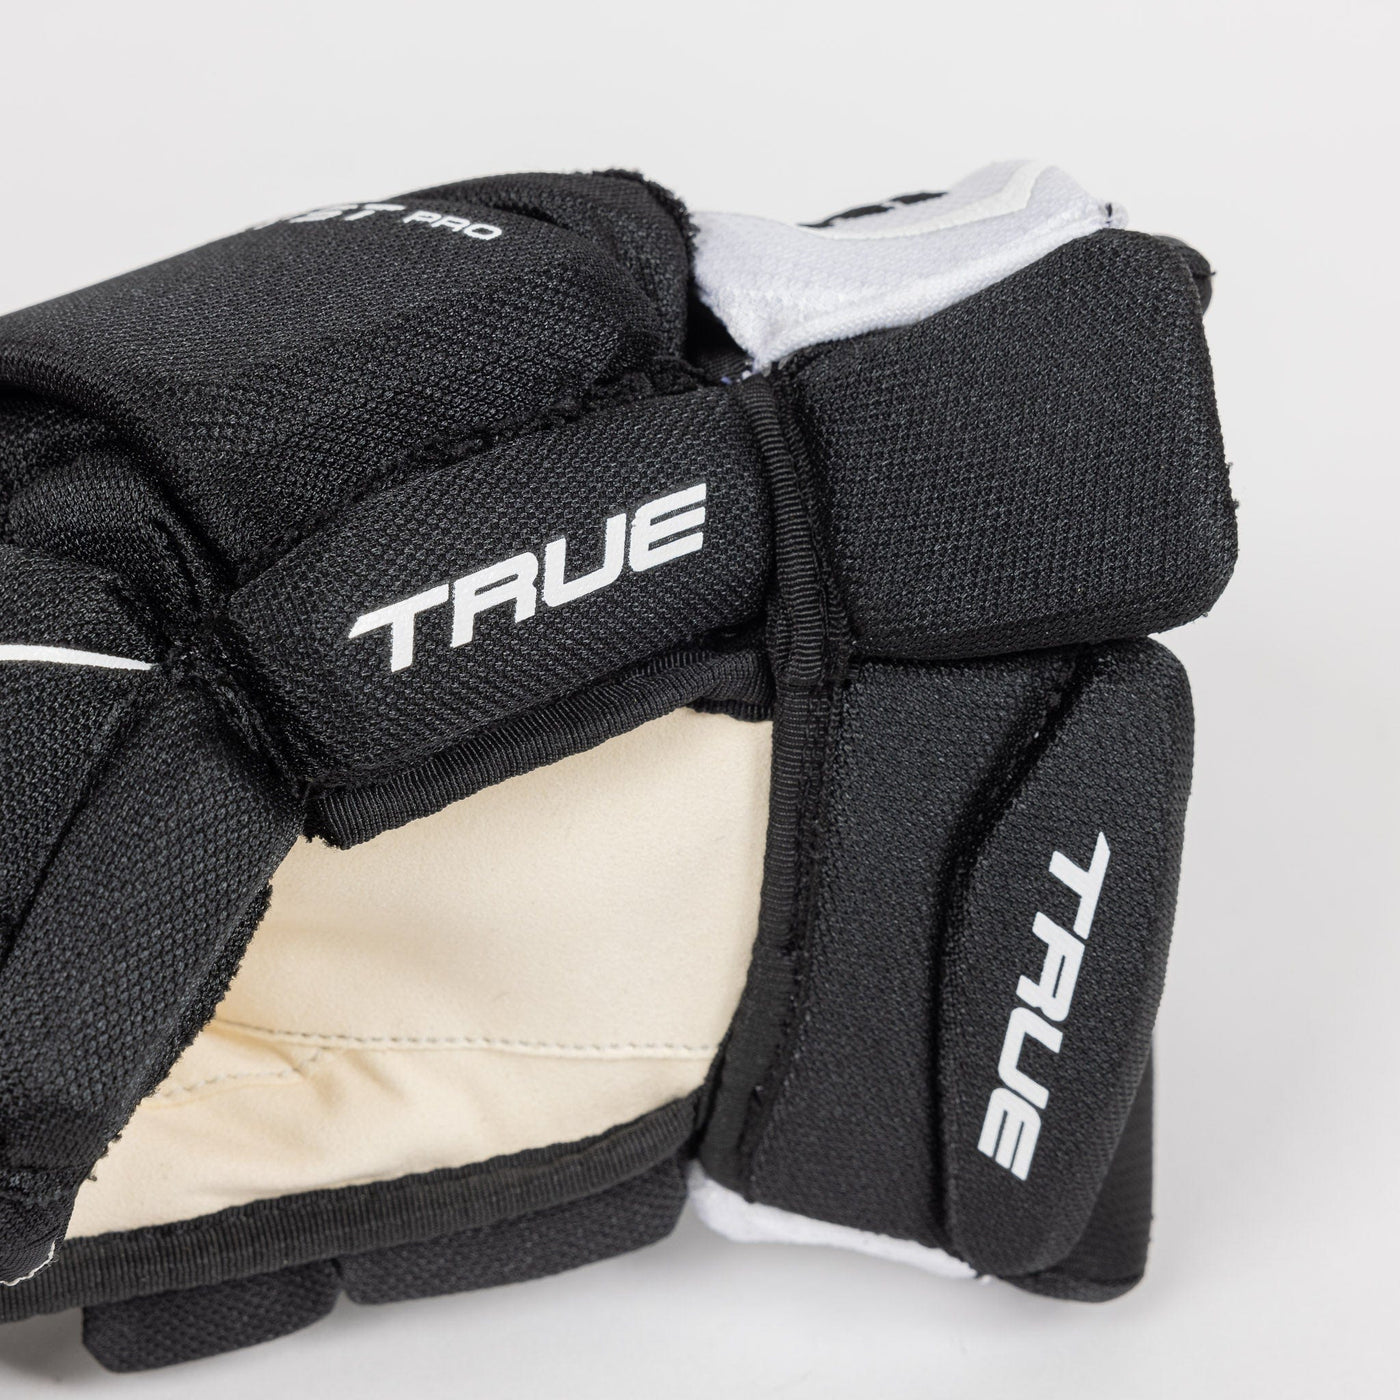 True Catalyst Pro Senior Hockey Glove - The Hockey Shop Source For Sports